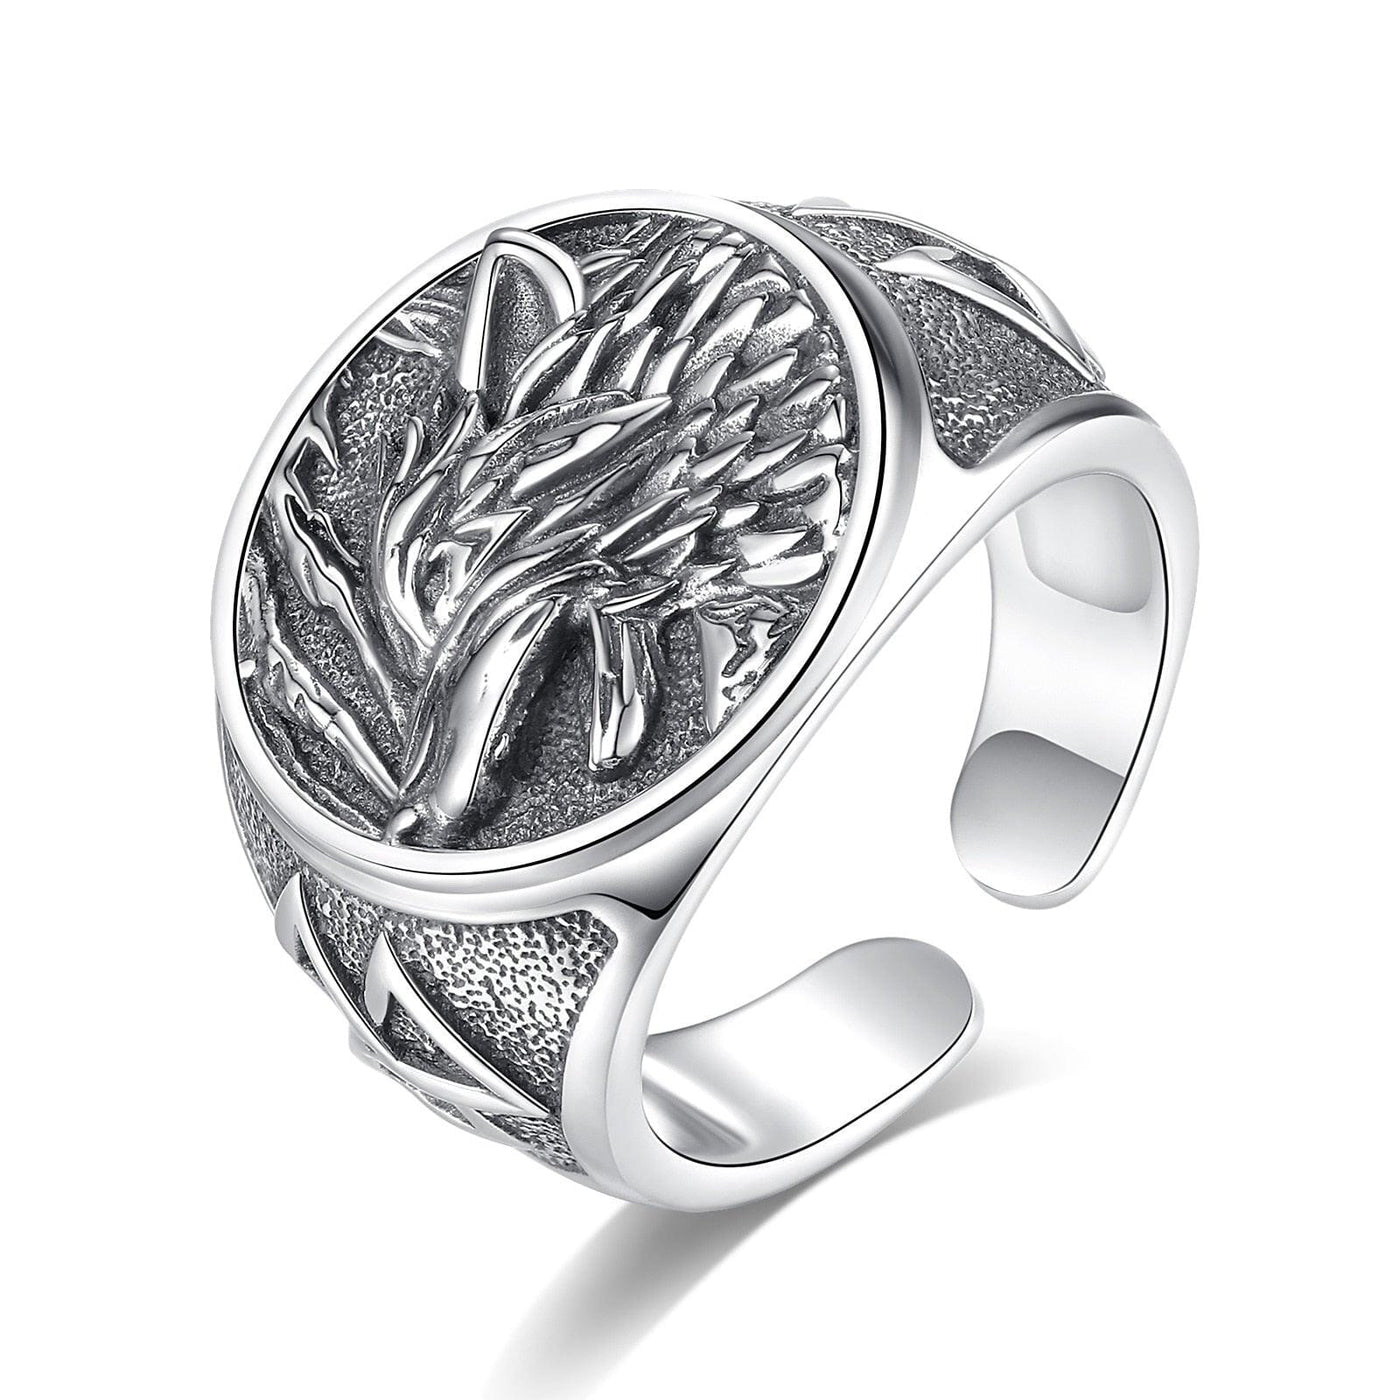 Anel Lobo Viking em Prata 925 - Tamanho Ajustável Ring Tesouros Vikings